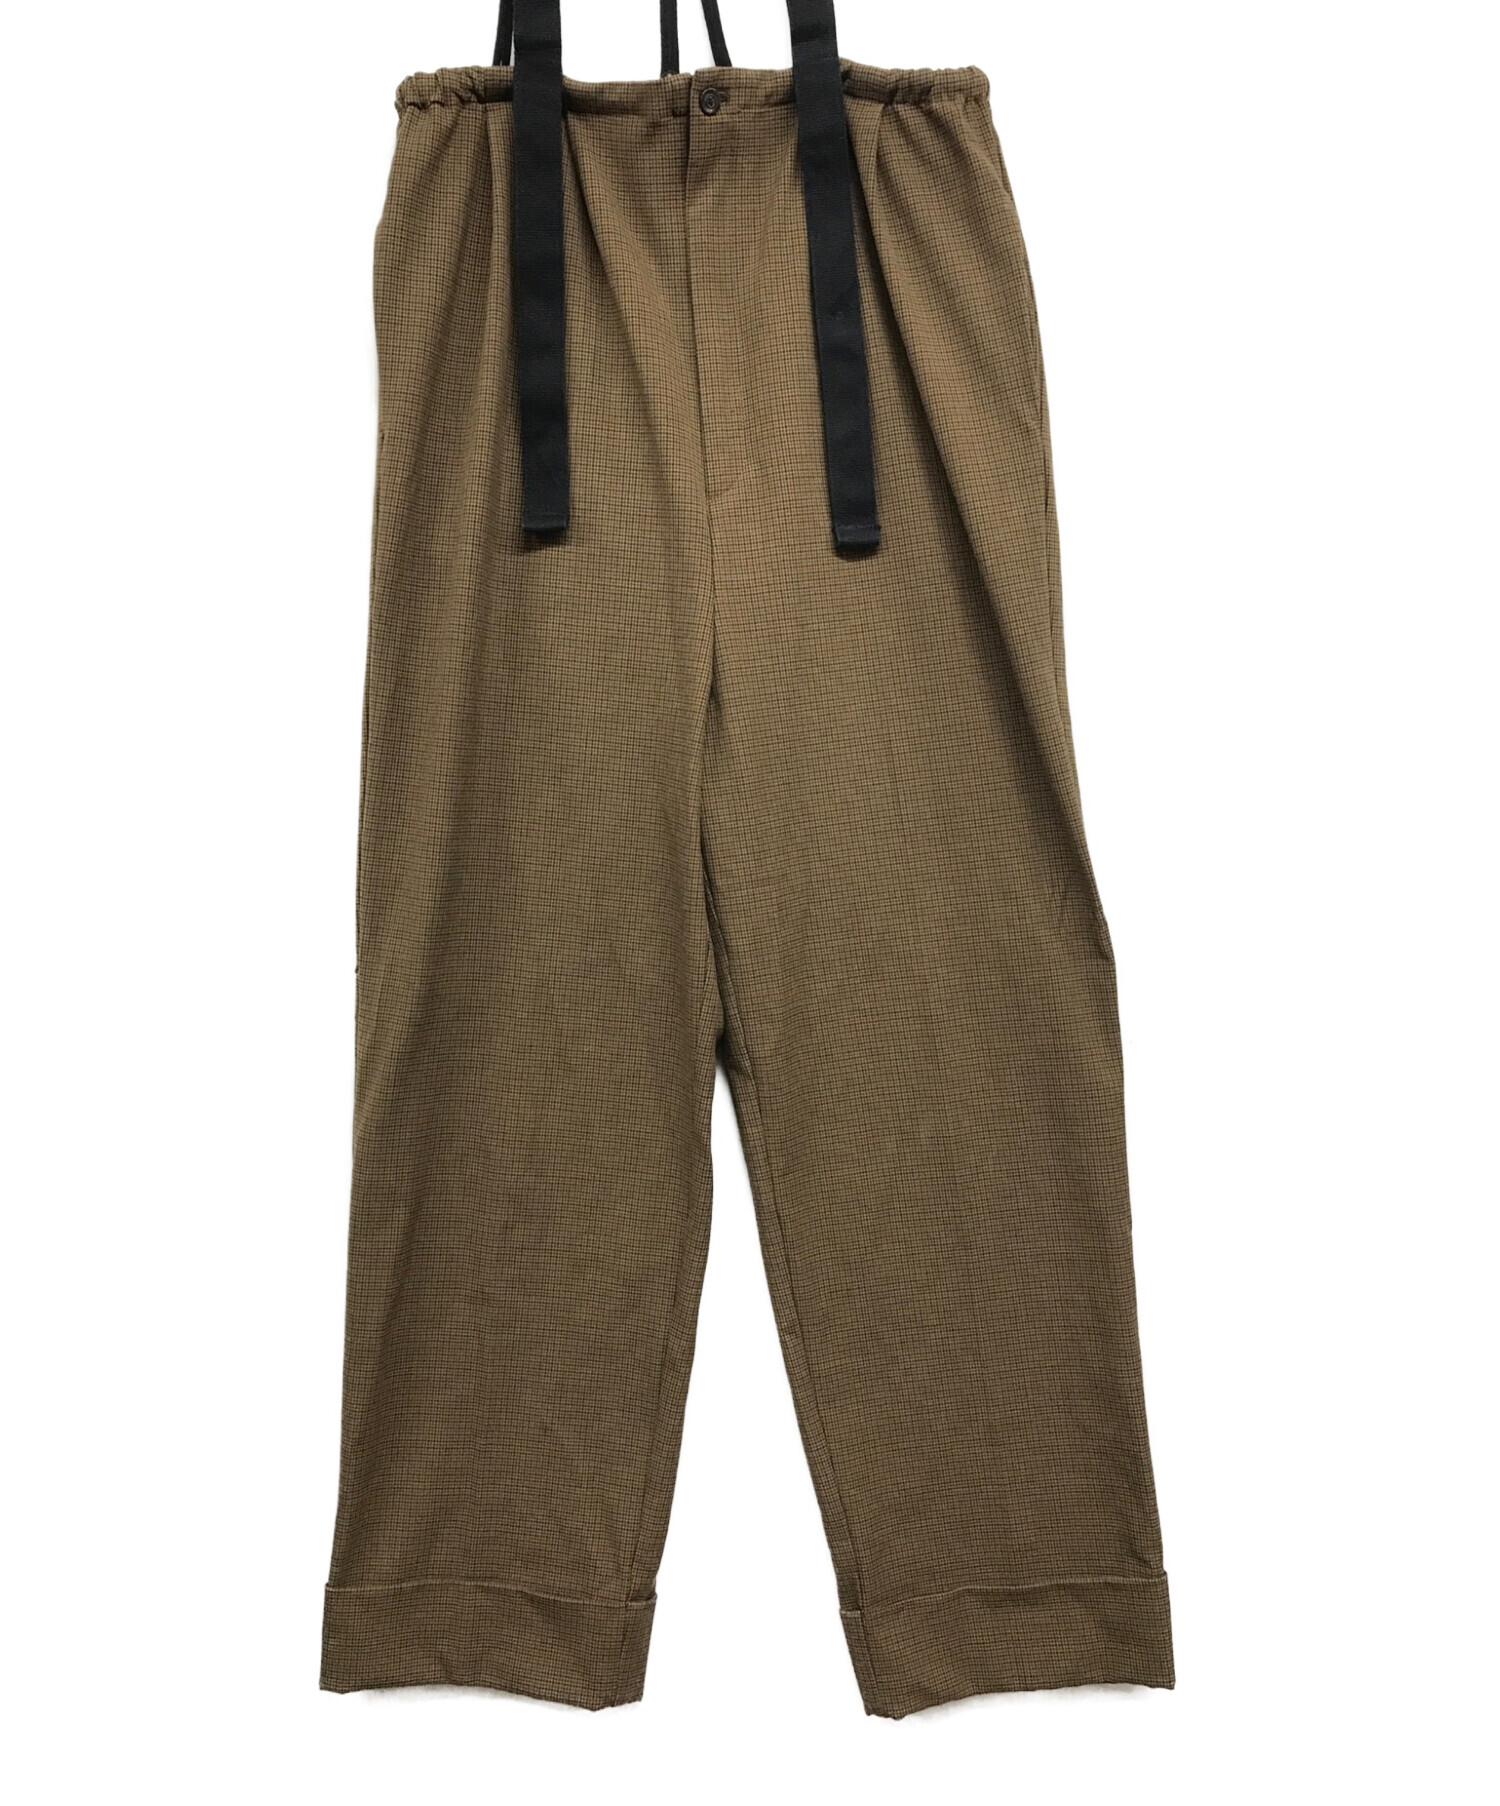 TODAYFUL (トゥデイフル) Suspenders Highwaist Pants ブラウン サイズ:38